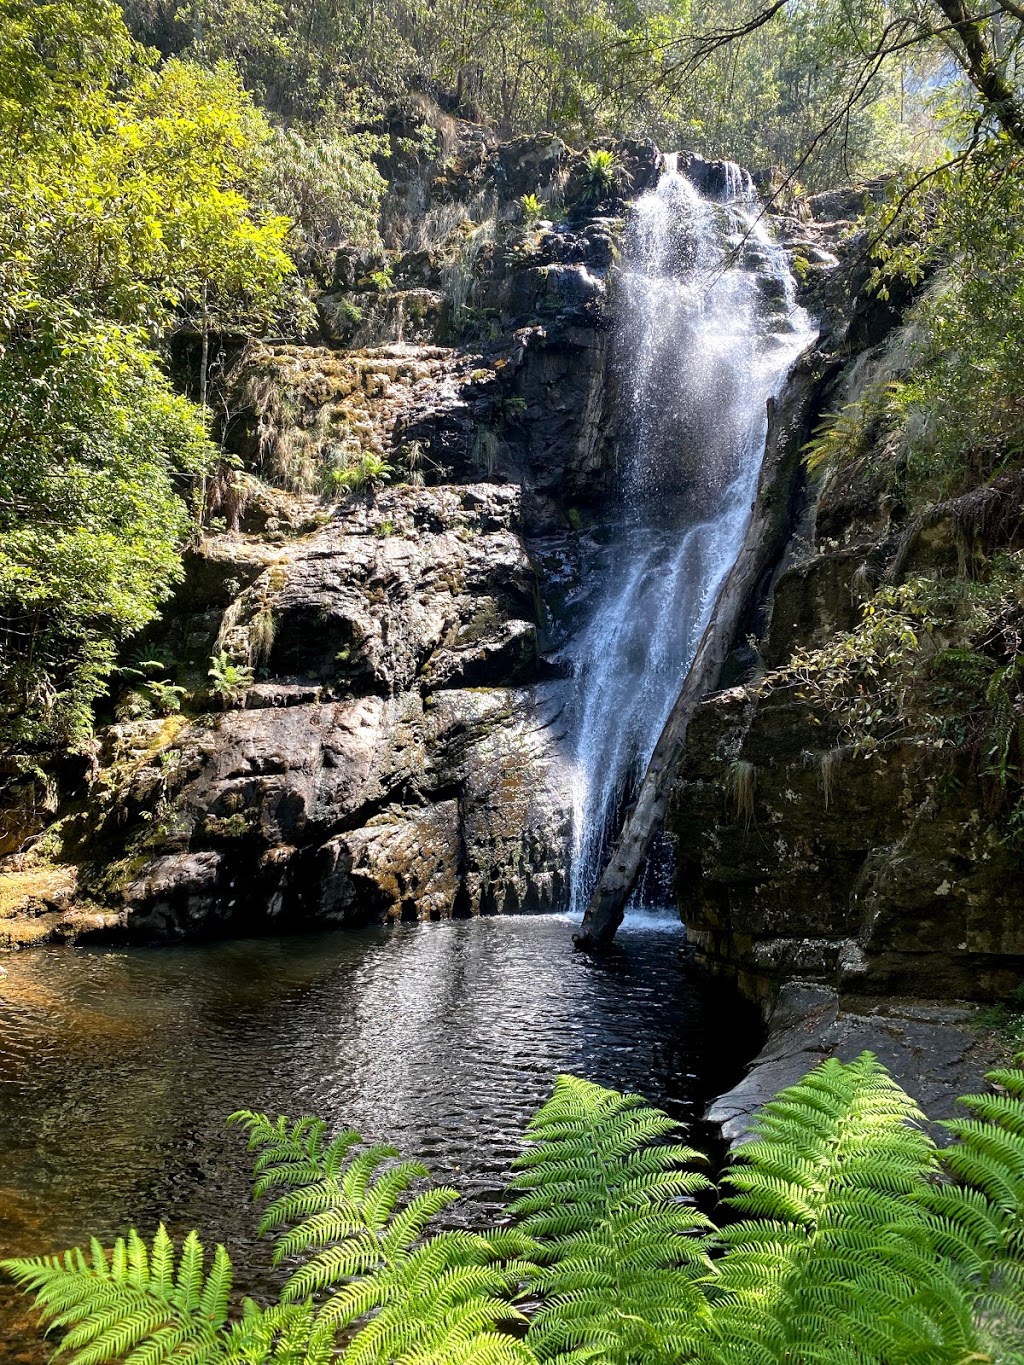 Mathinna Falls | park | Mathinna Falls Track, Mathinna TAS 7214, Australia